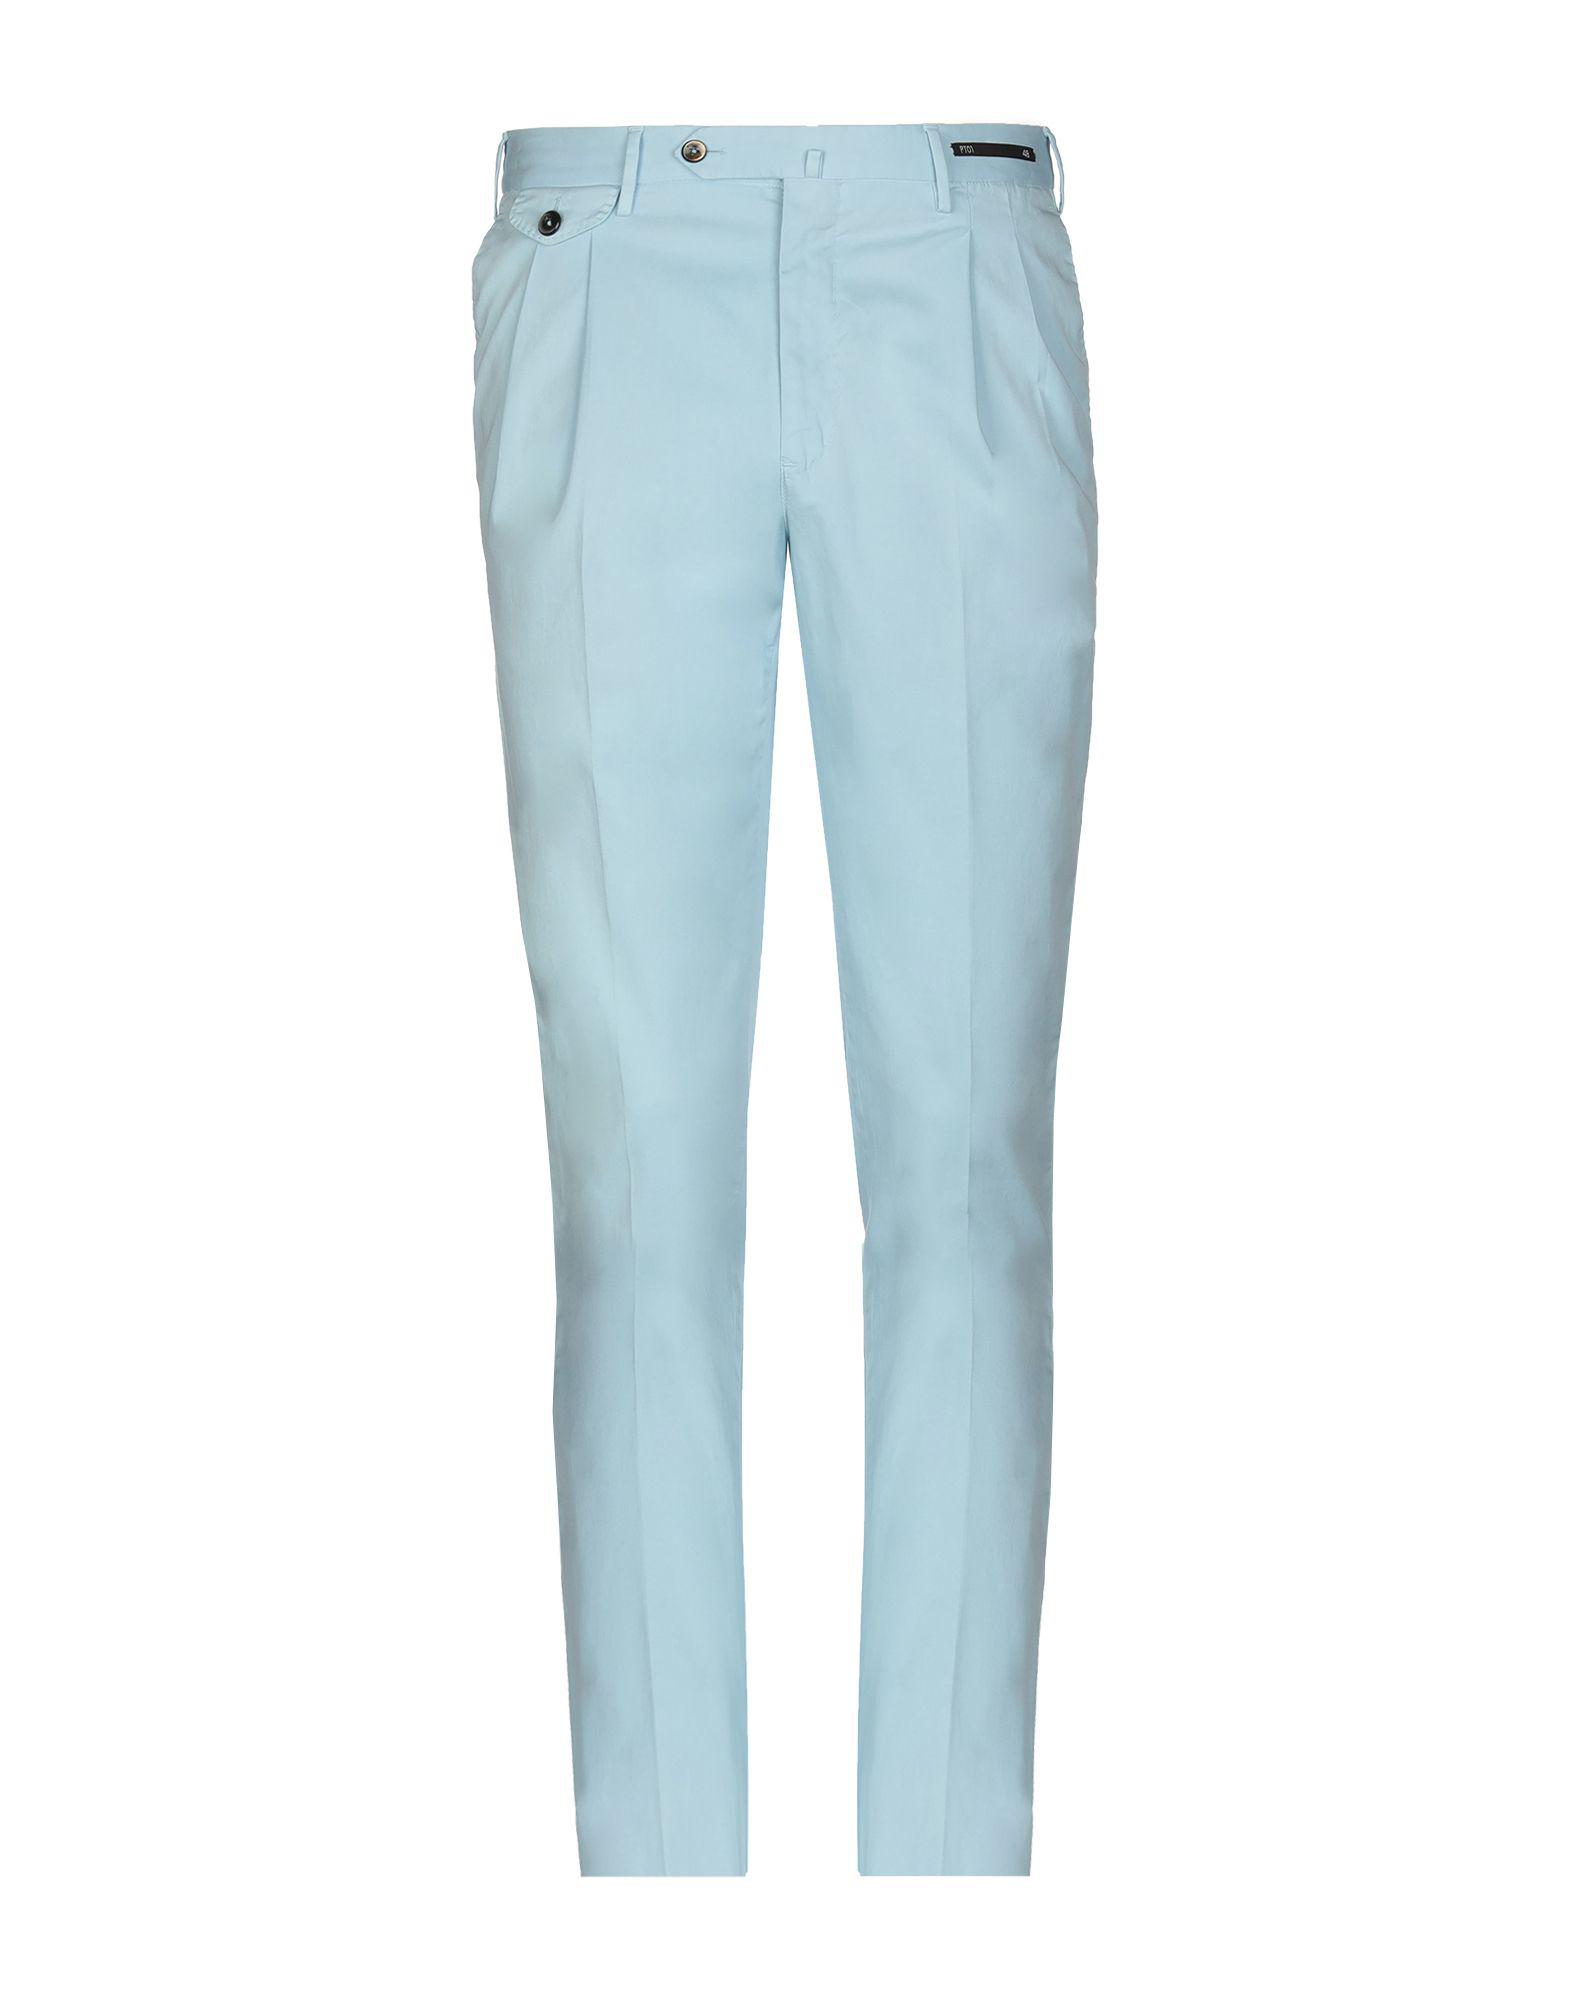 PT01 Cotton Casual Pants in Sky Blue (Blue) for Men - Lyst